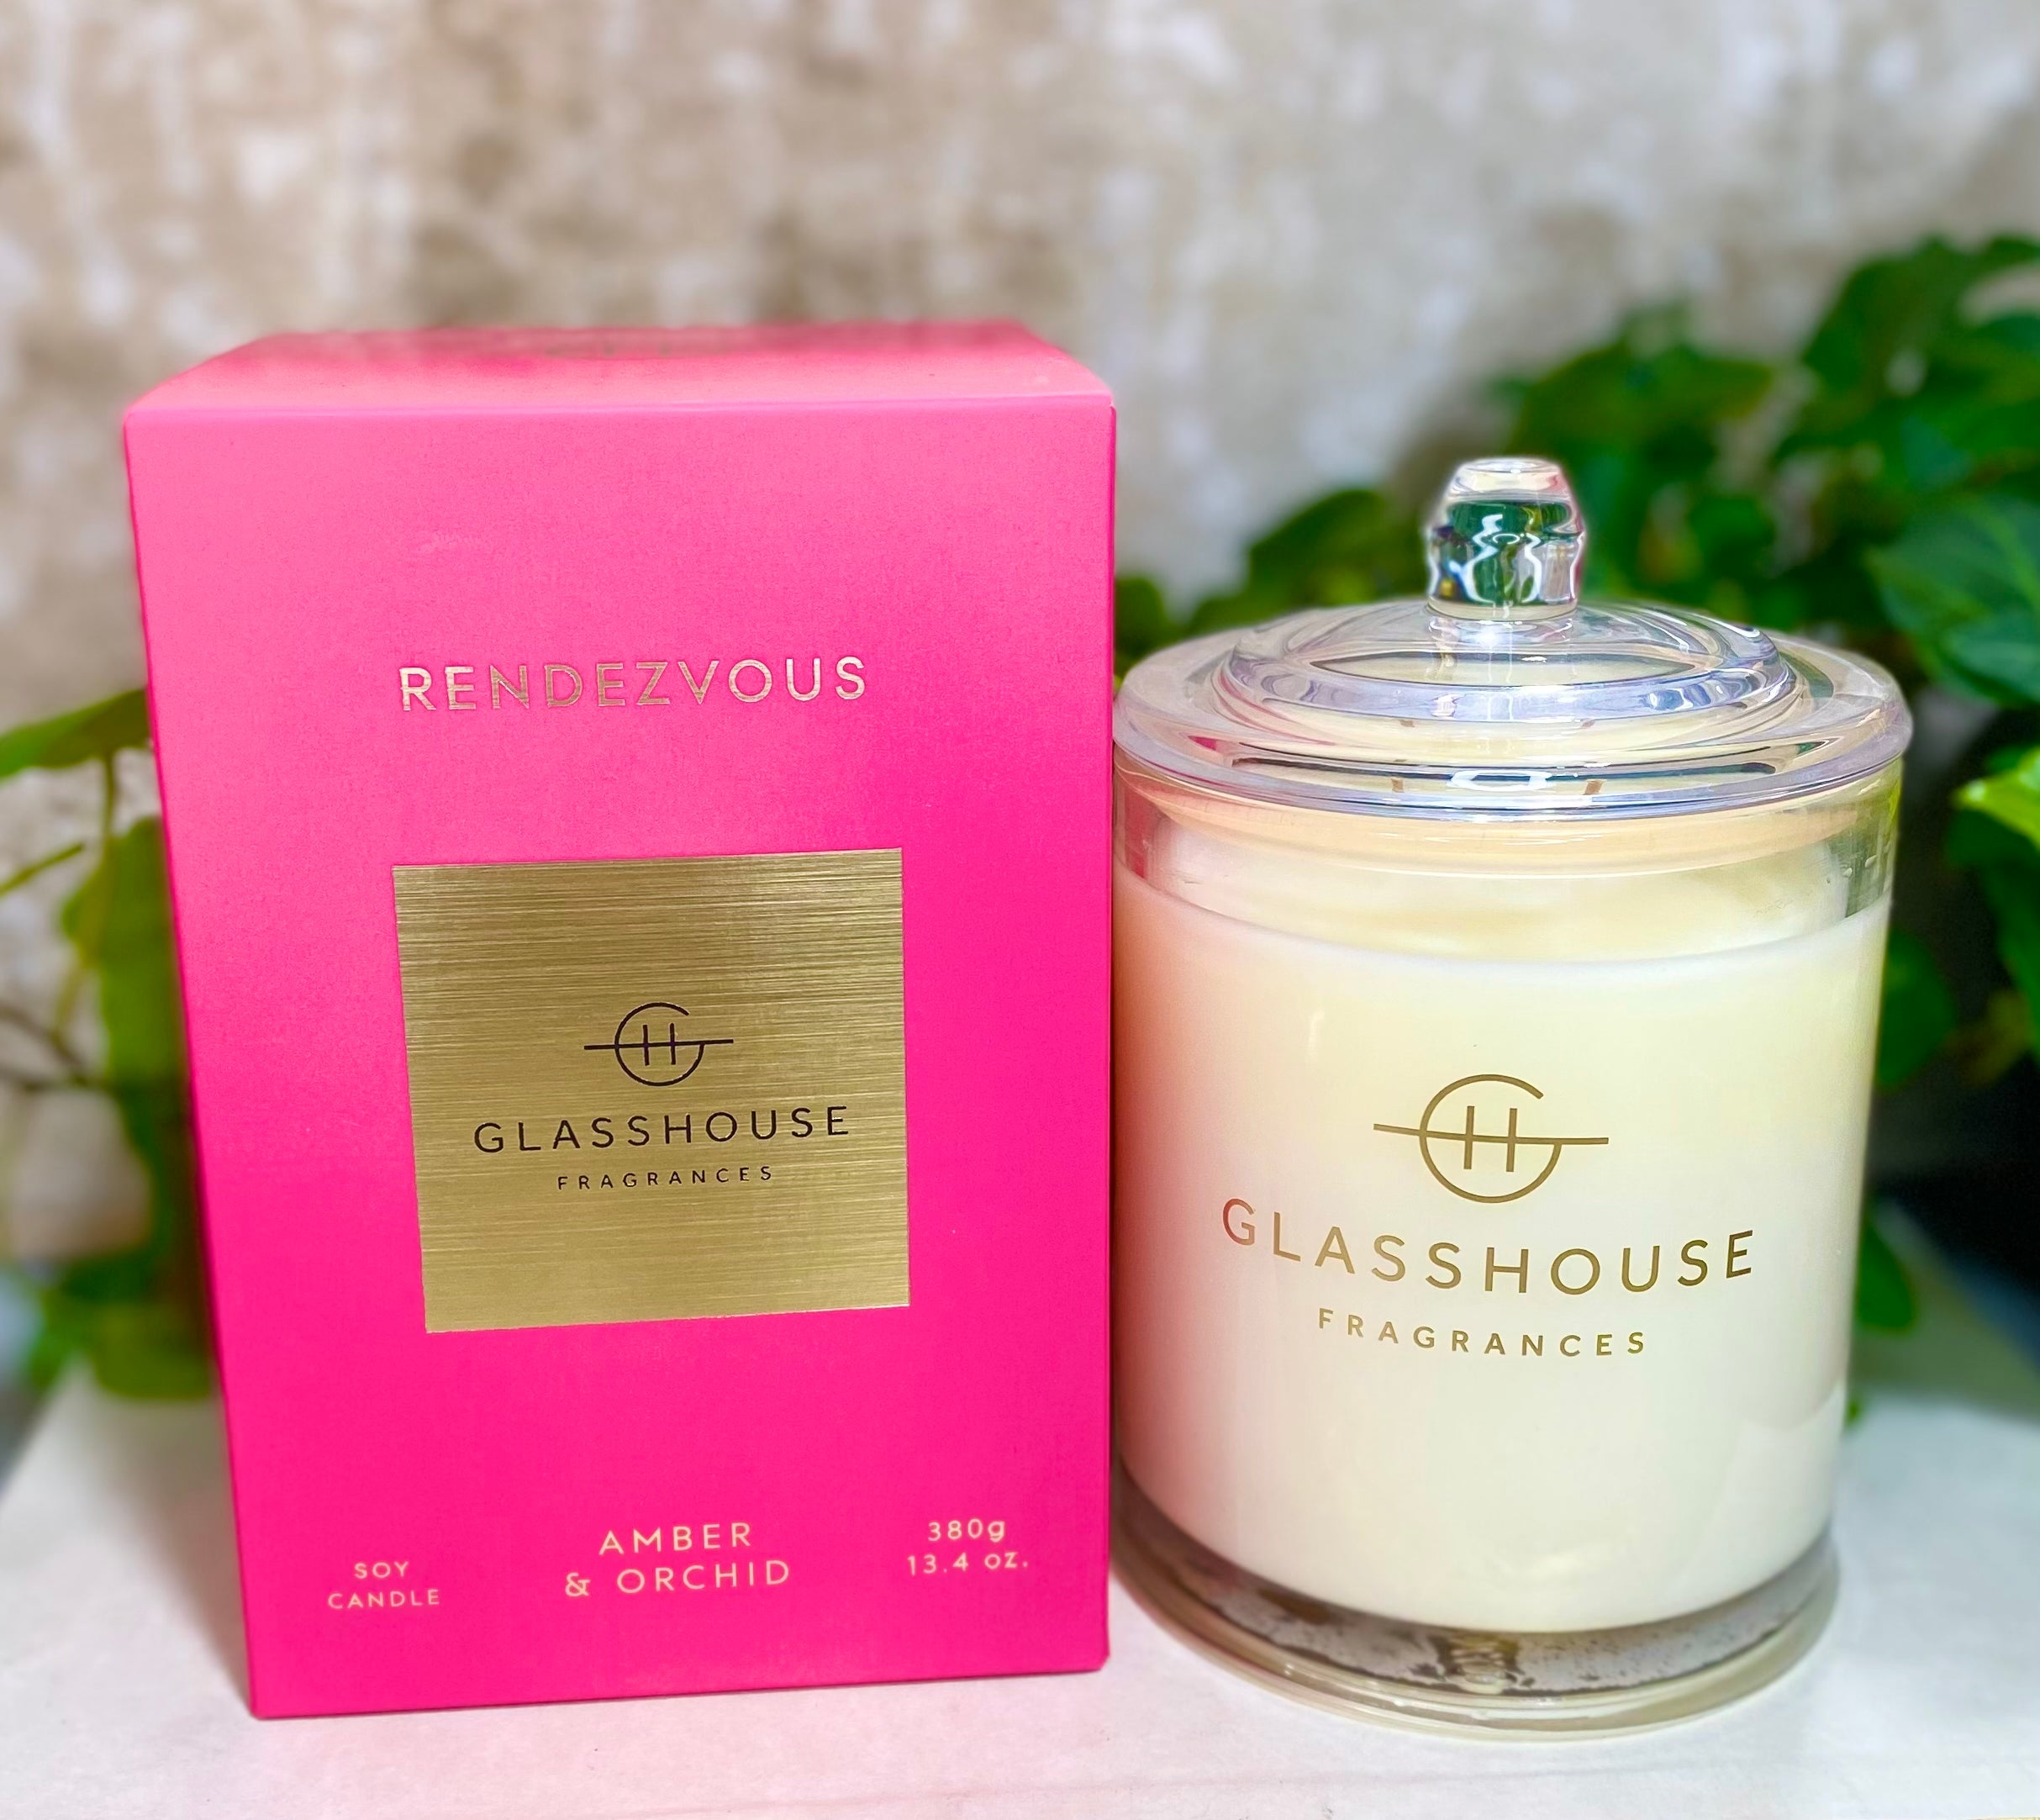 Glasshouse “Rendezvous” candle 13.4 oz